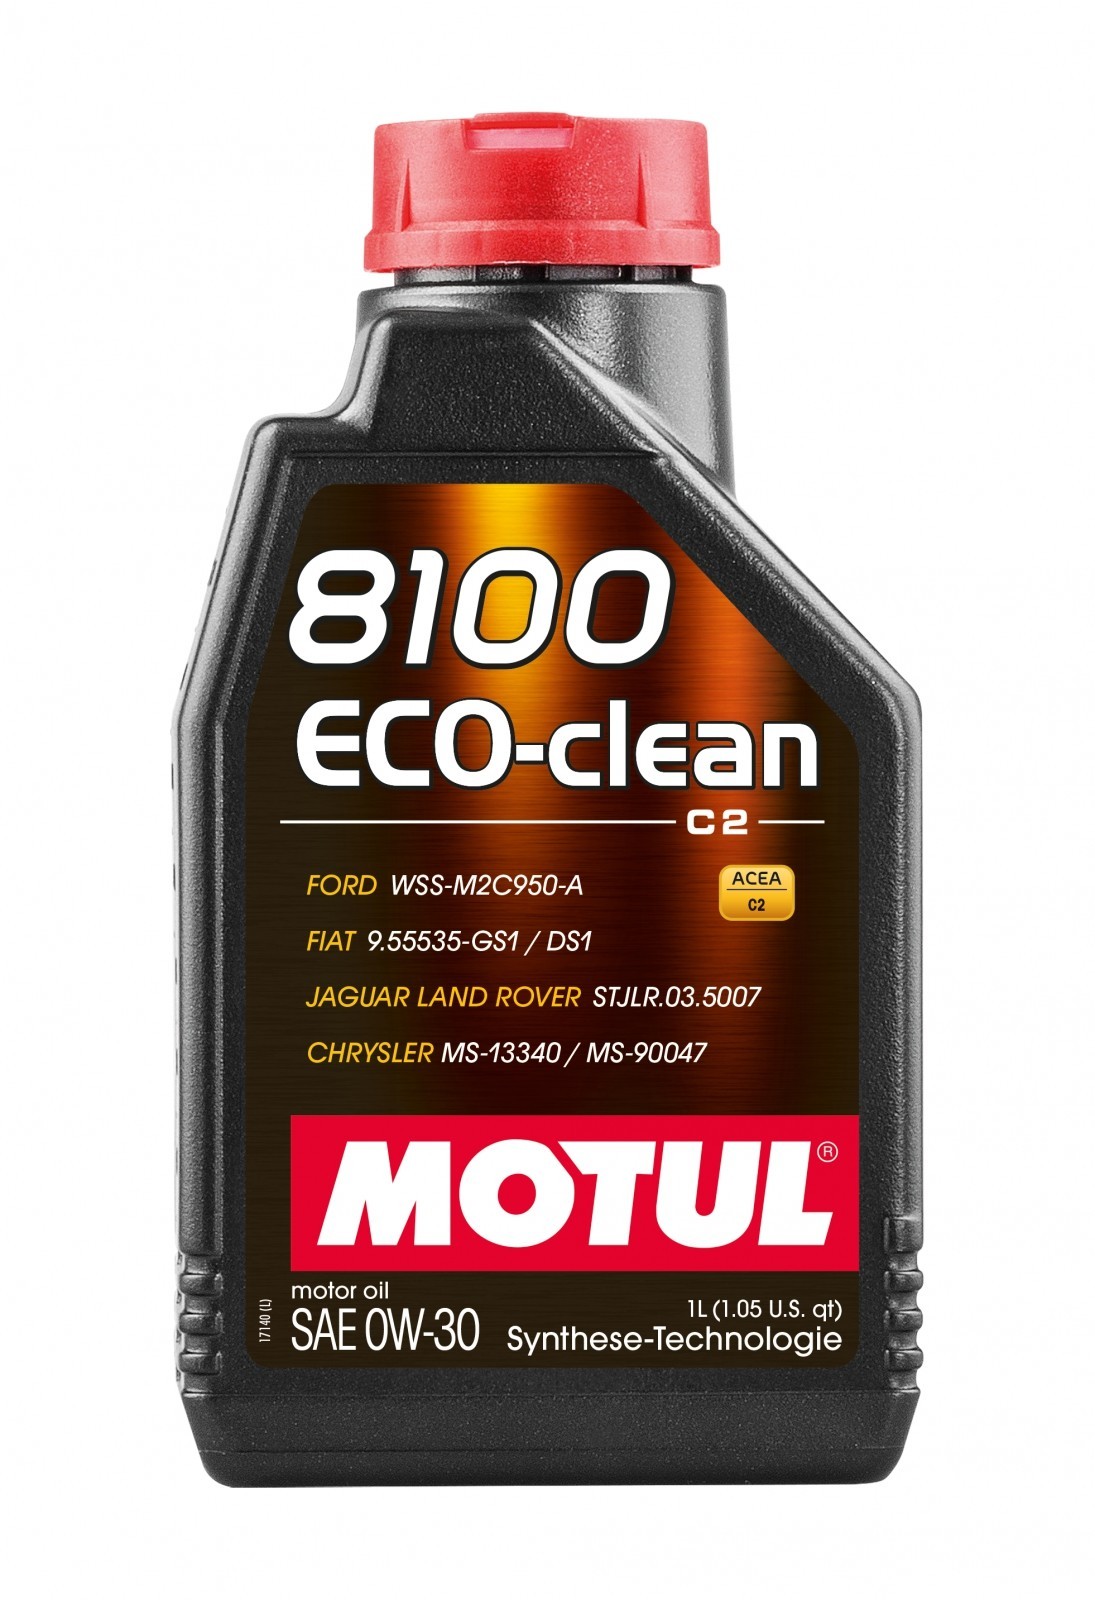 MOTUL 8100 ECO-CLEAN 0W30 0W-30 1 L (109671) für KIA Ceed FIAT Ducato Xceed